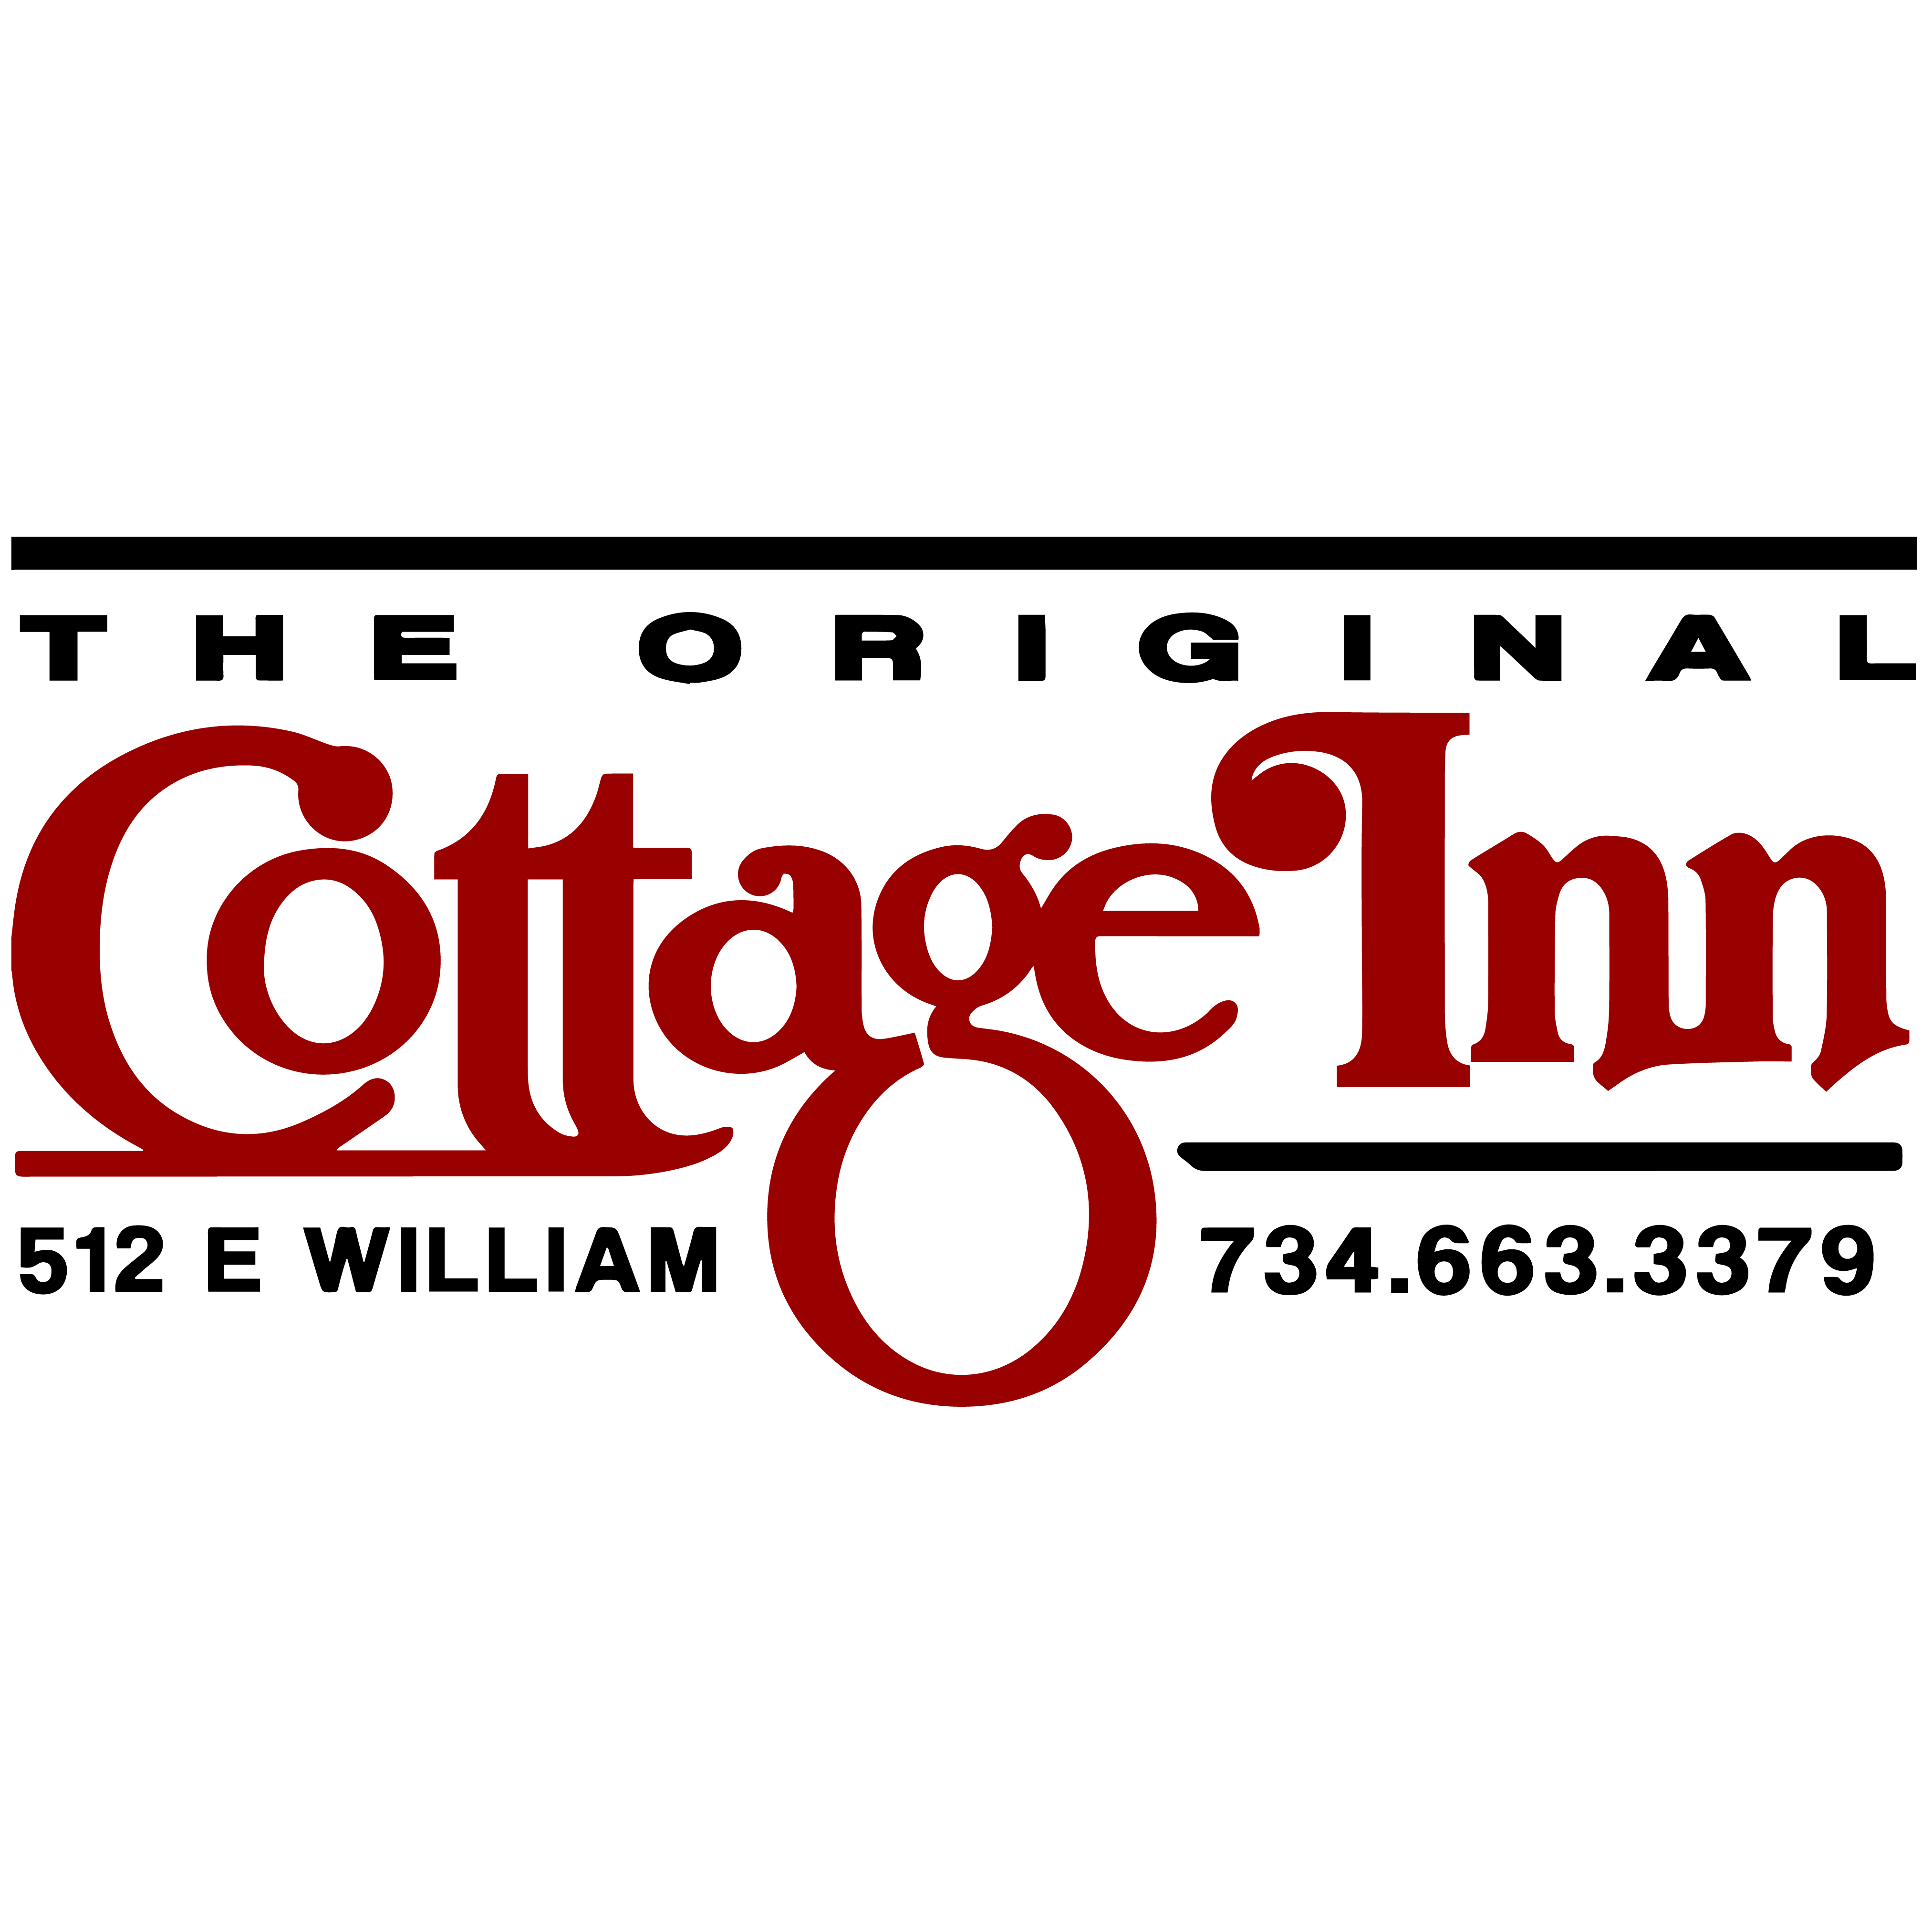 Contactless Menu - Original Cottage Inn